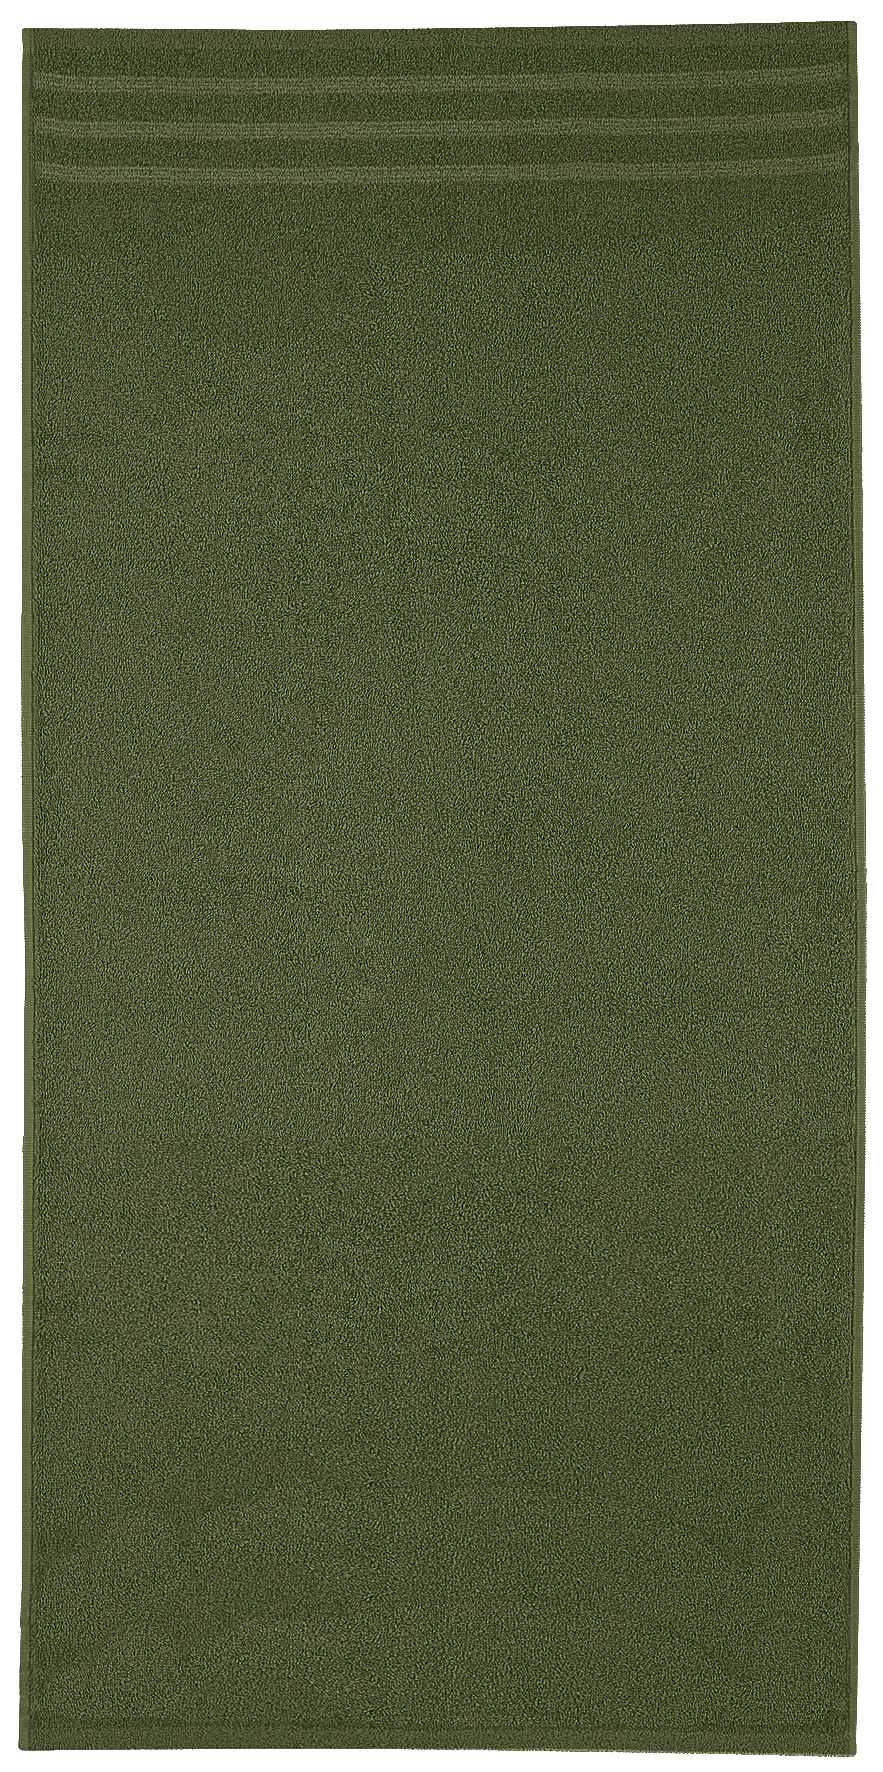 Handtuch, Royal Forest,  50x100 cm